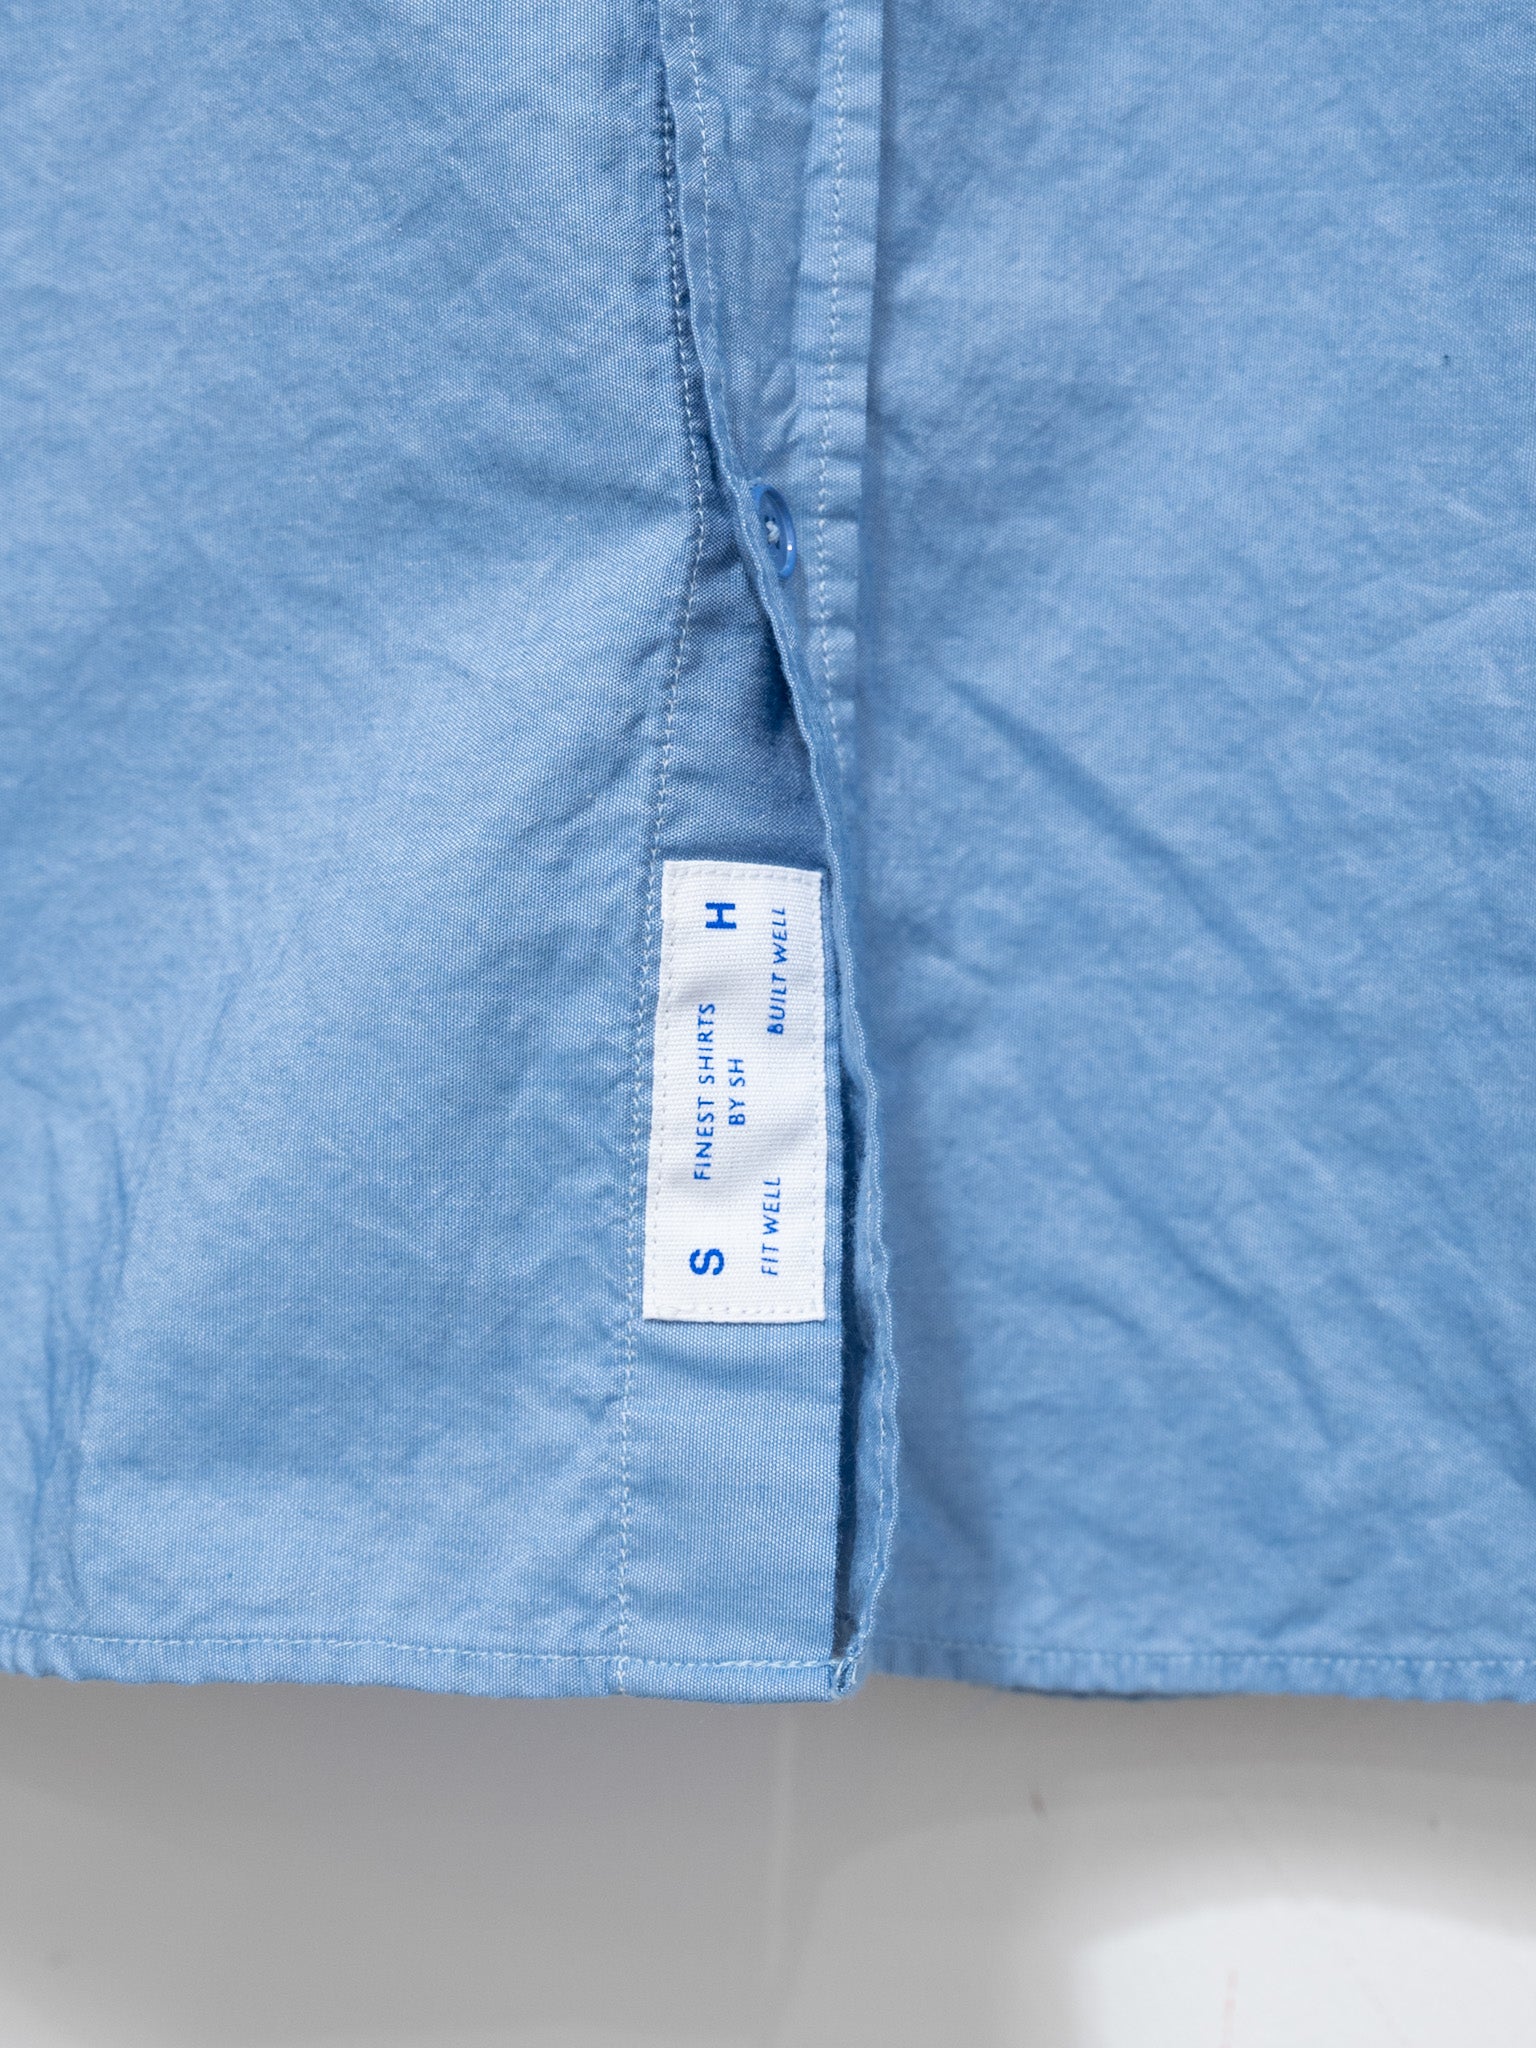 Namu Shop - S H Western Shirt - Blue Chambray